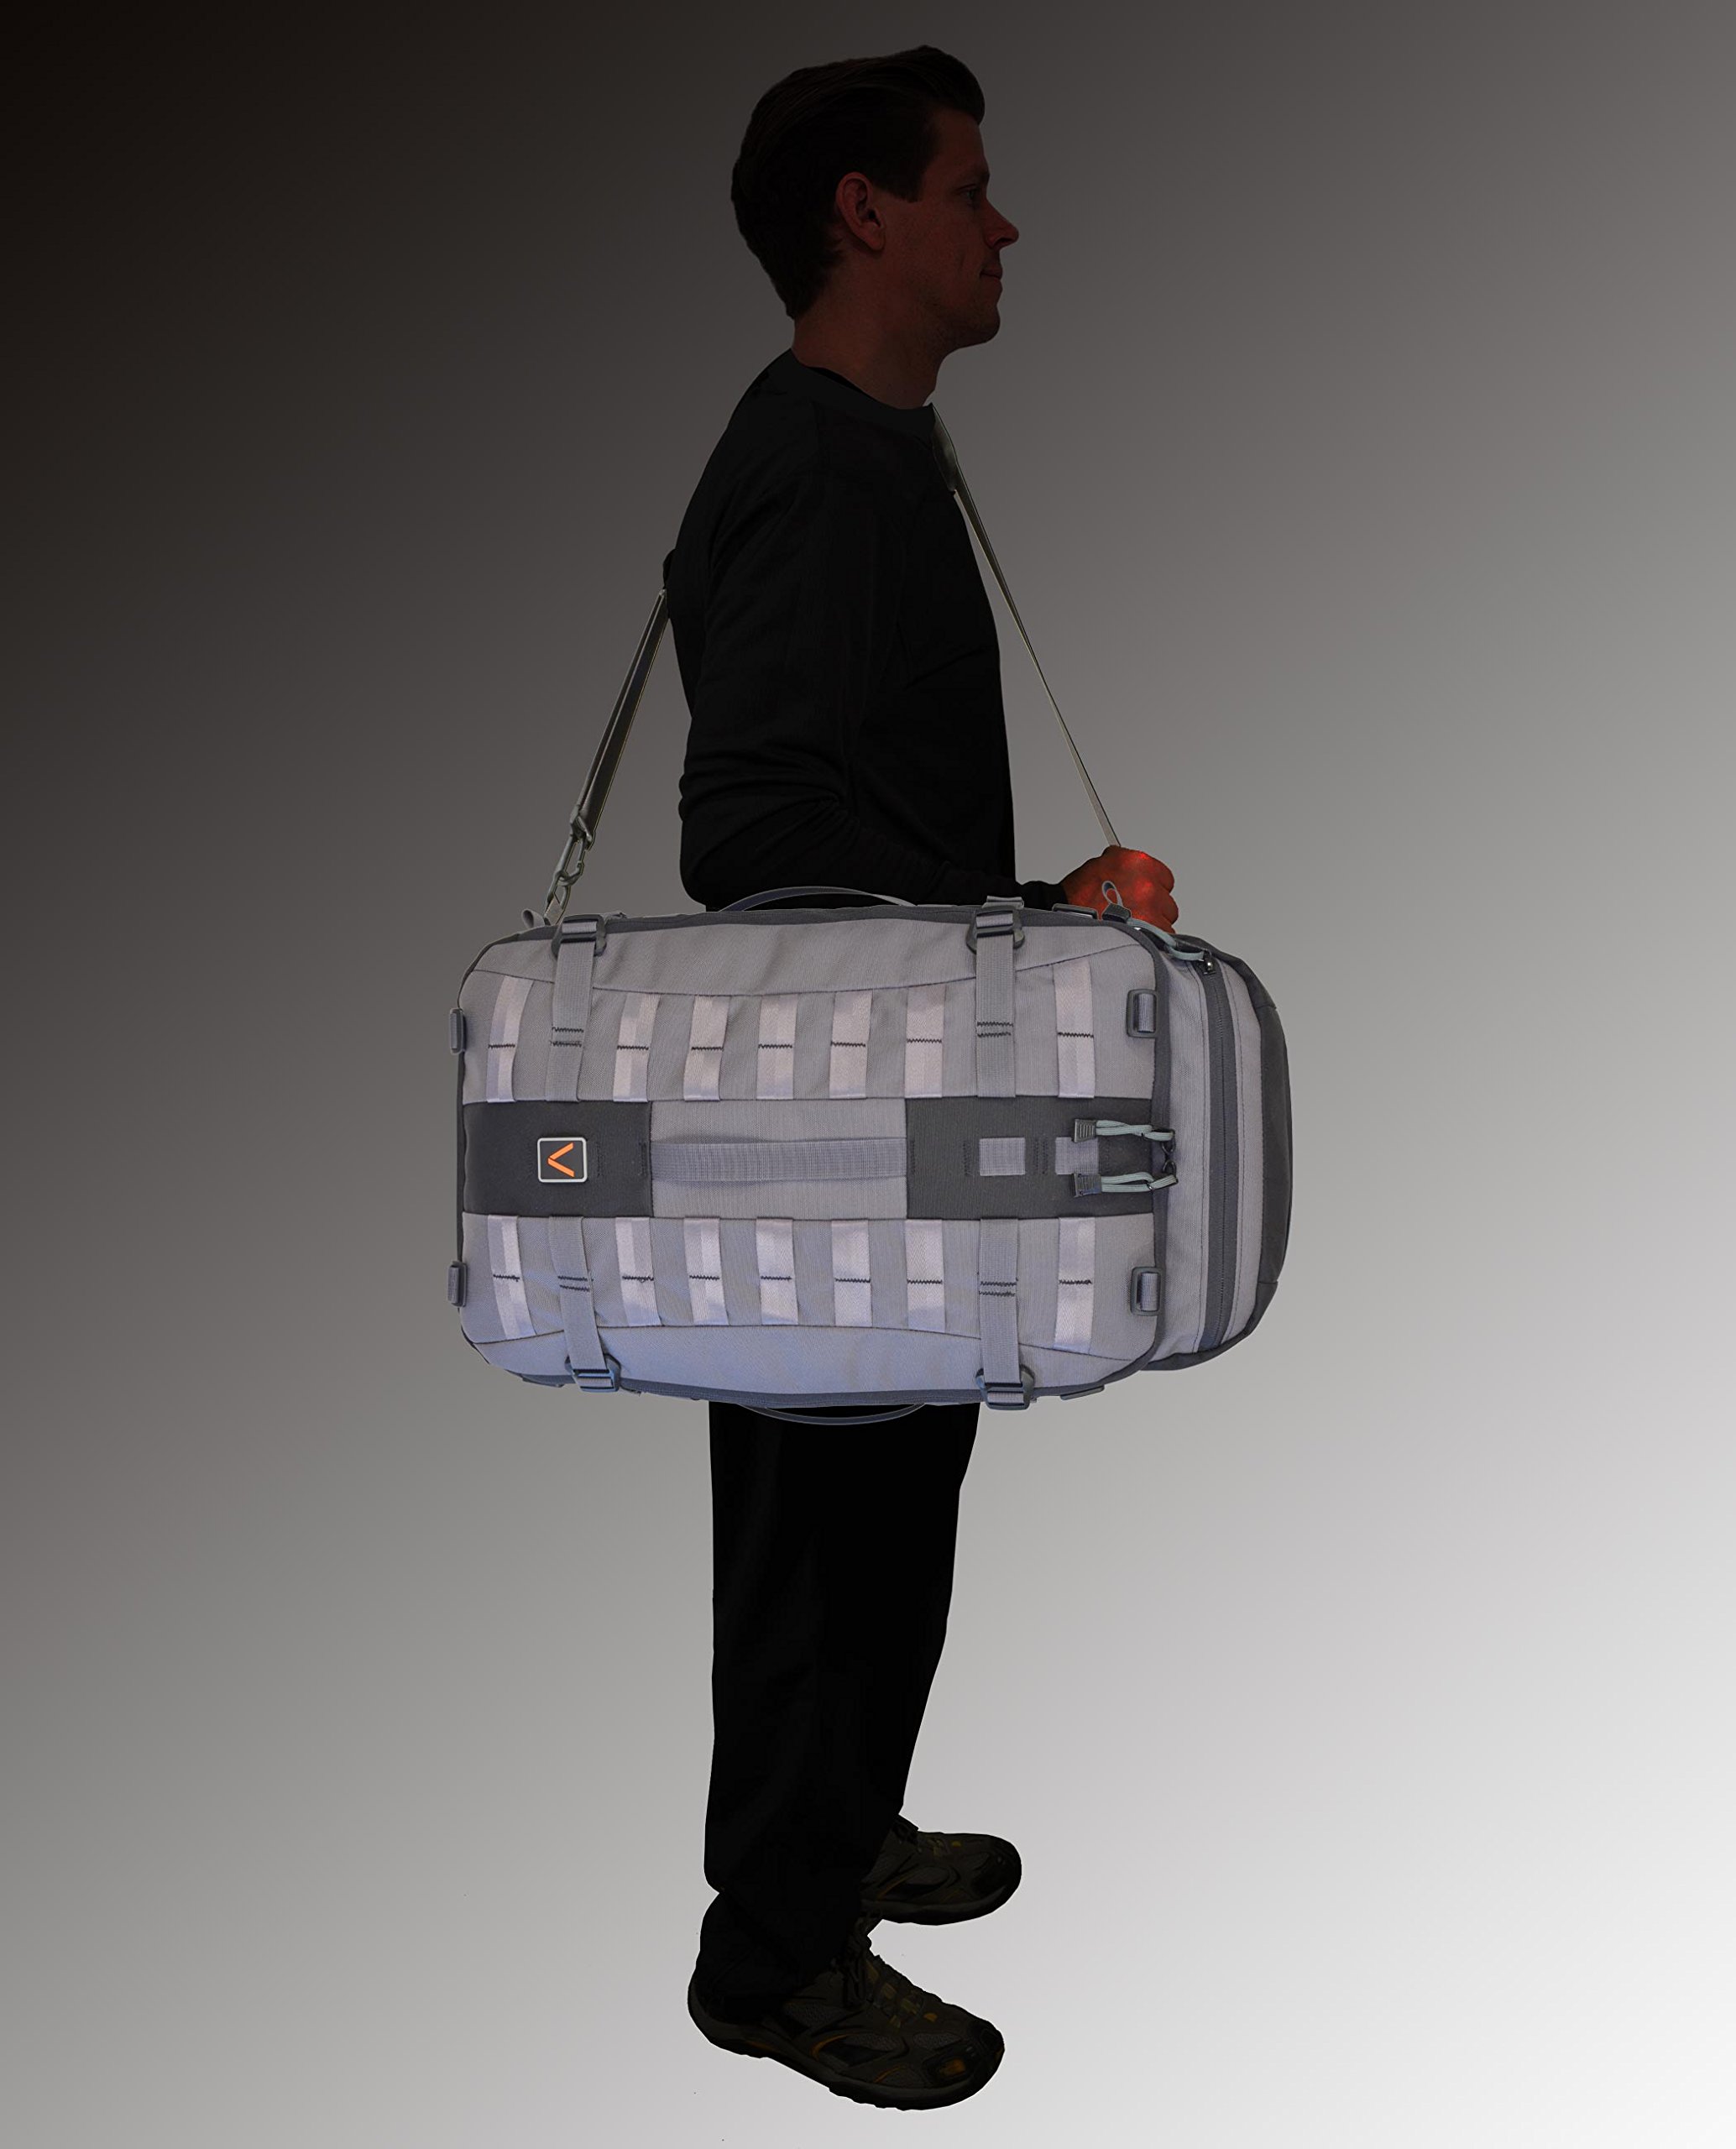 Vital Gear Air Rover Modular Adventure Travel Backpack, Grey, Medium/40mm